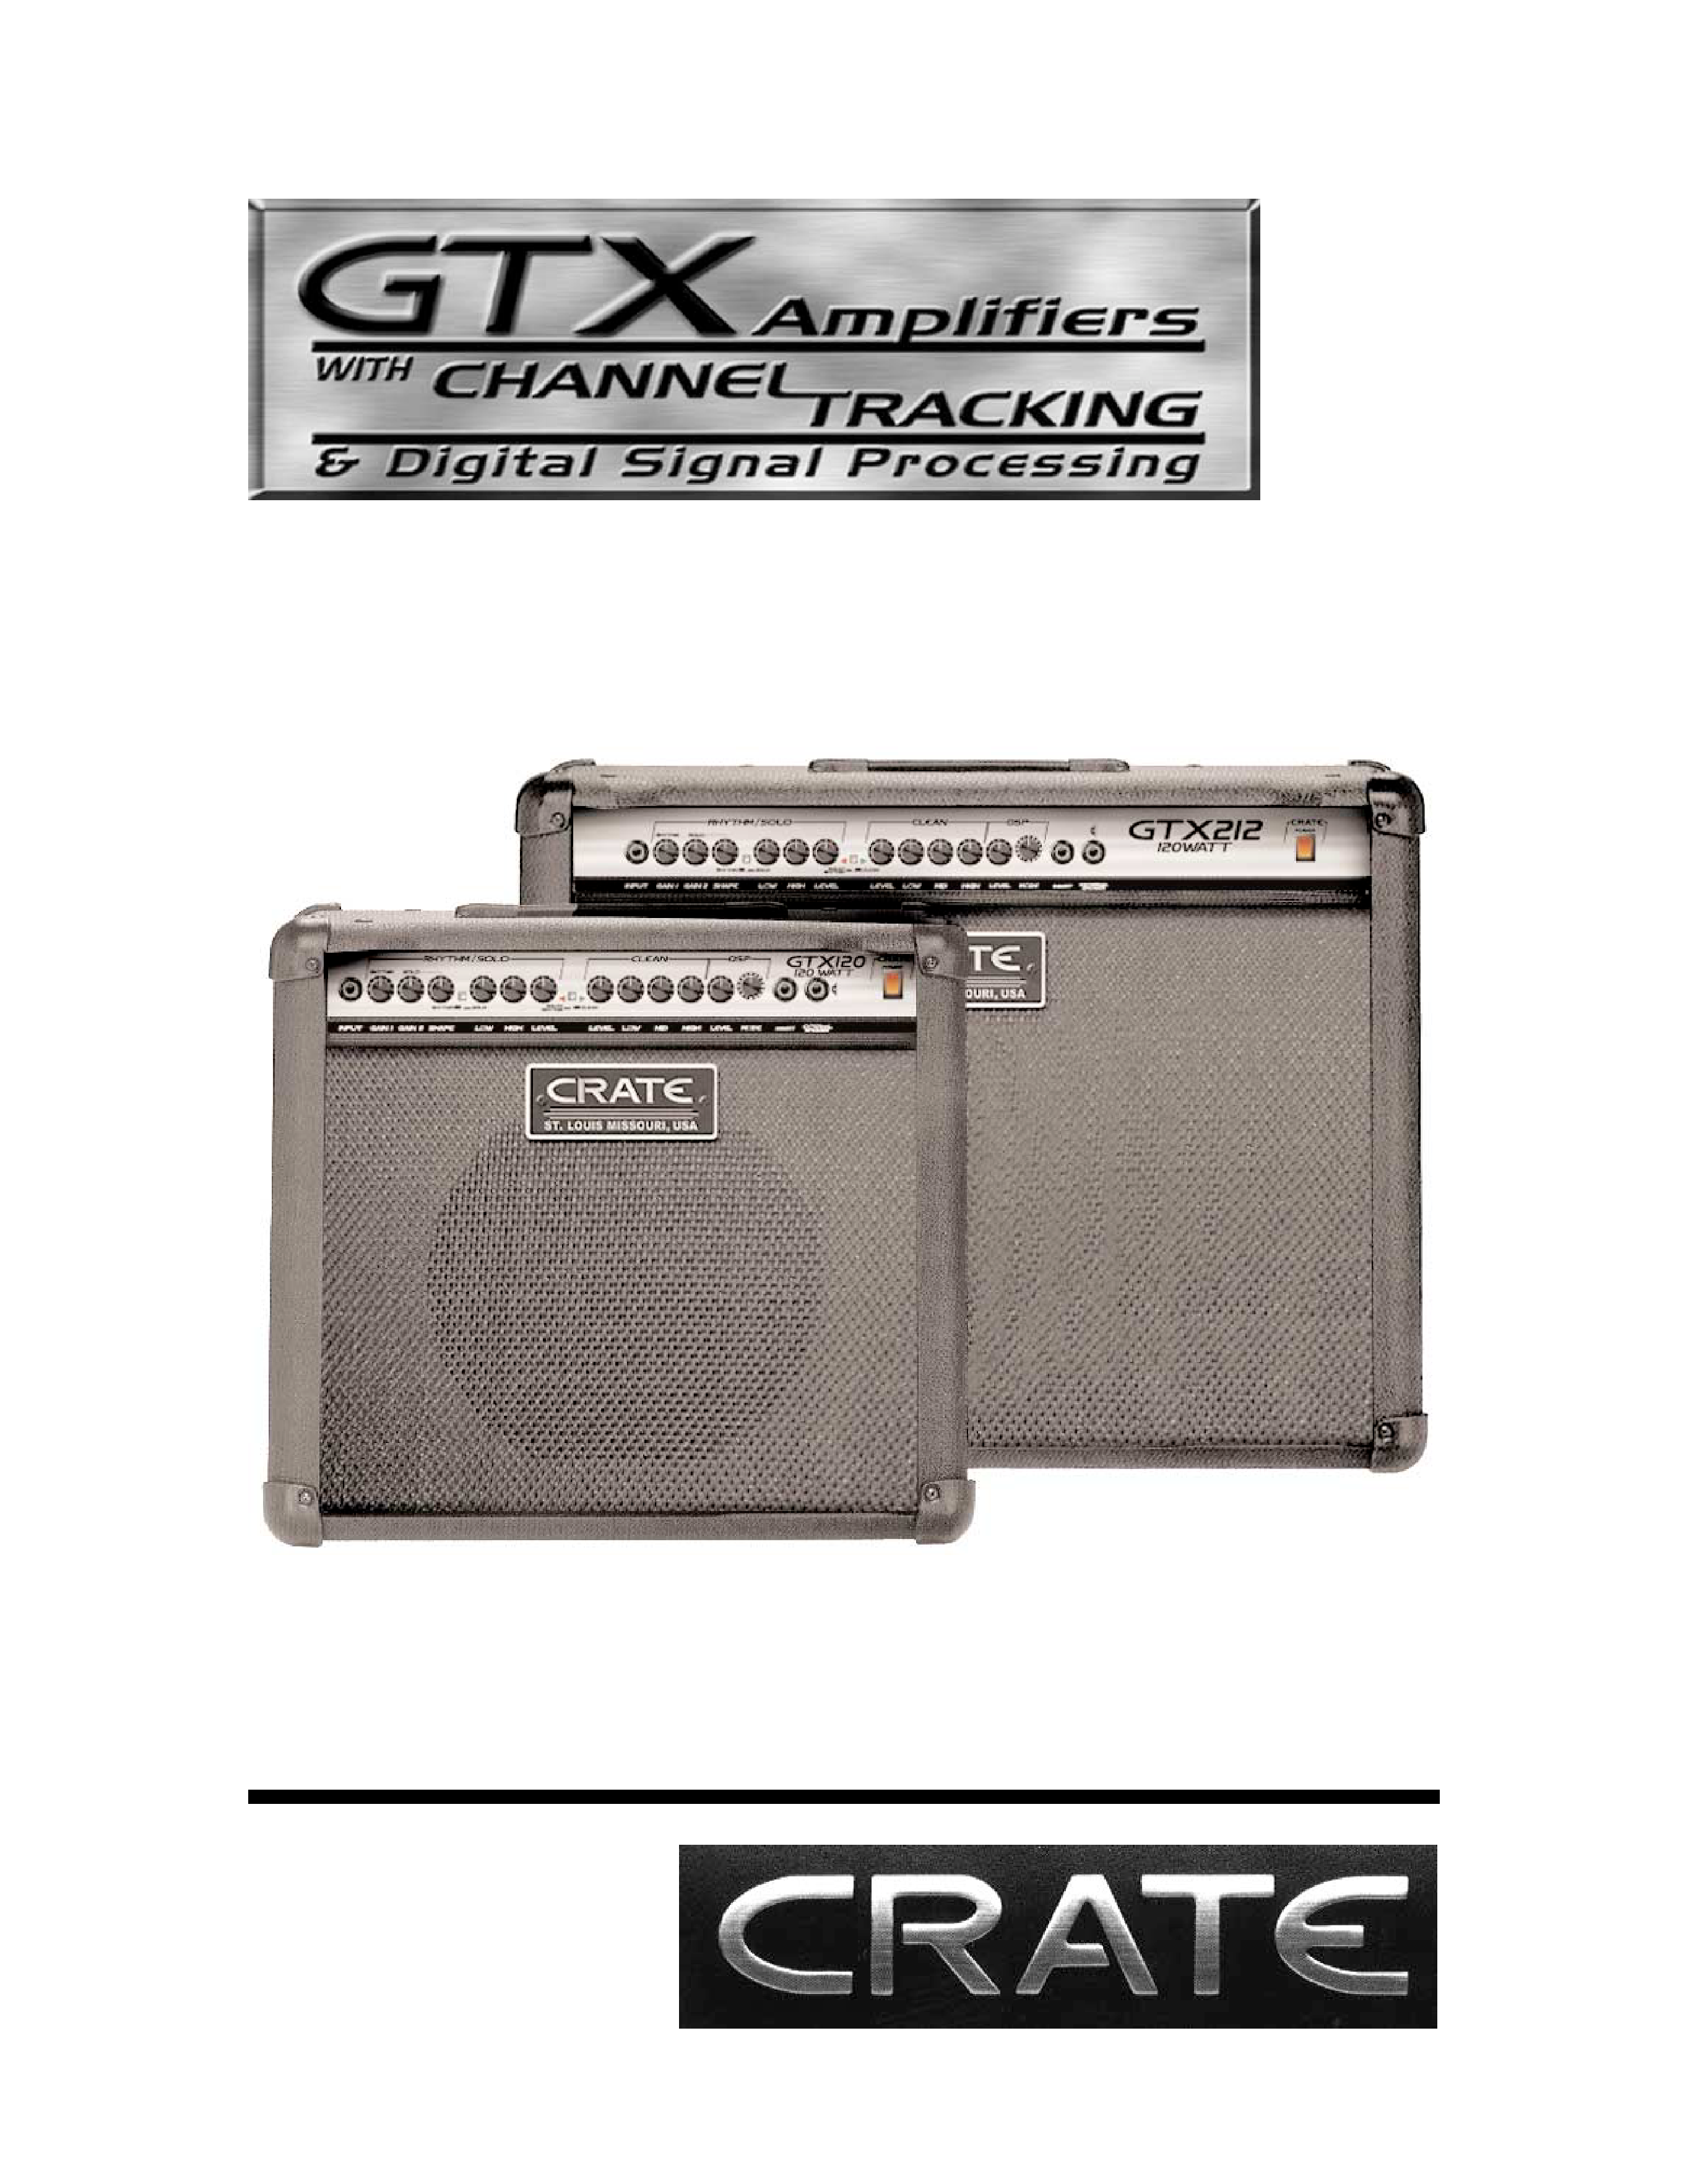 CRATE GTX120 - Owner's Manual Immediate Download